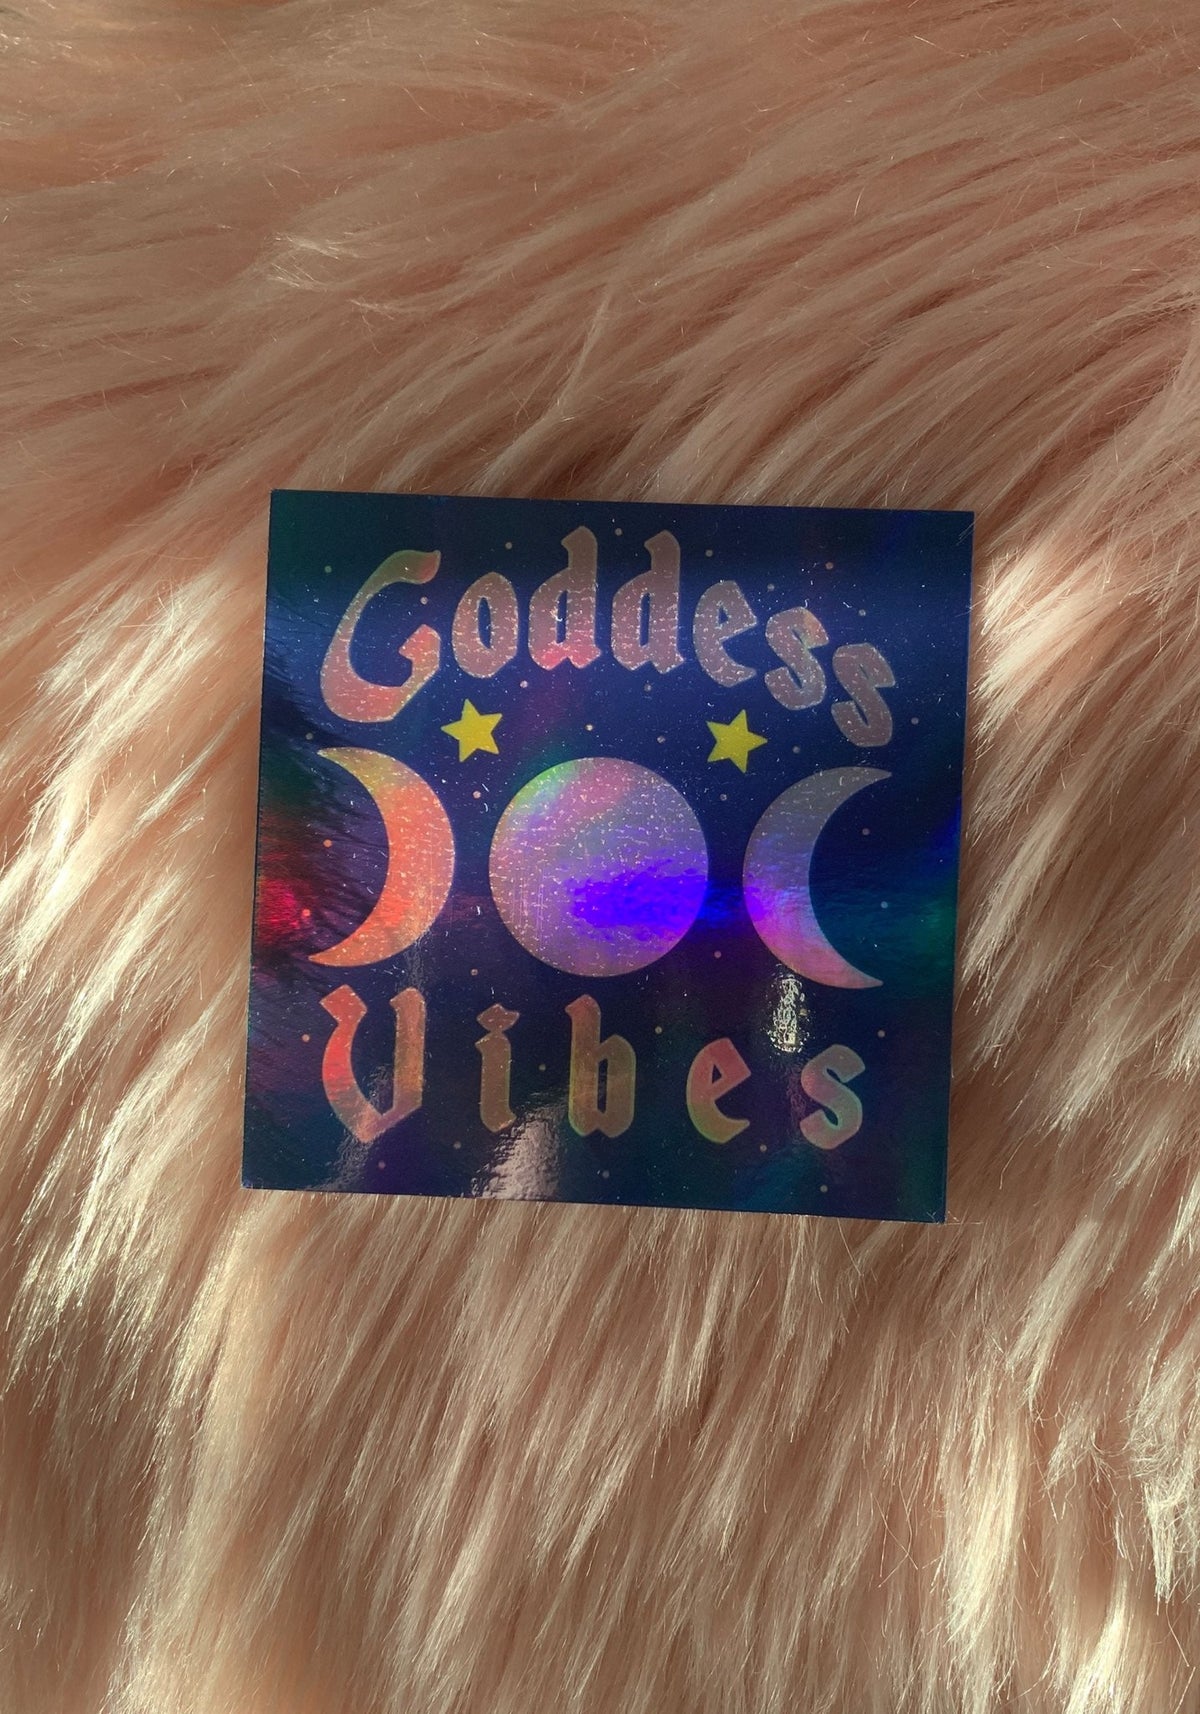 Goddess Vibes Holographic Sticker by kaeraz decal goddess hologram